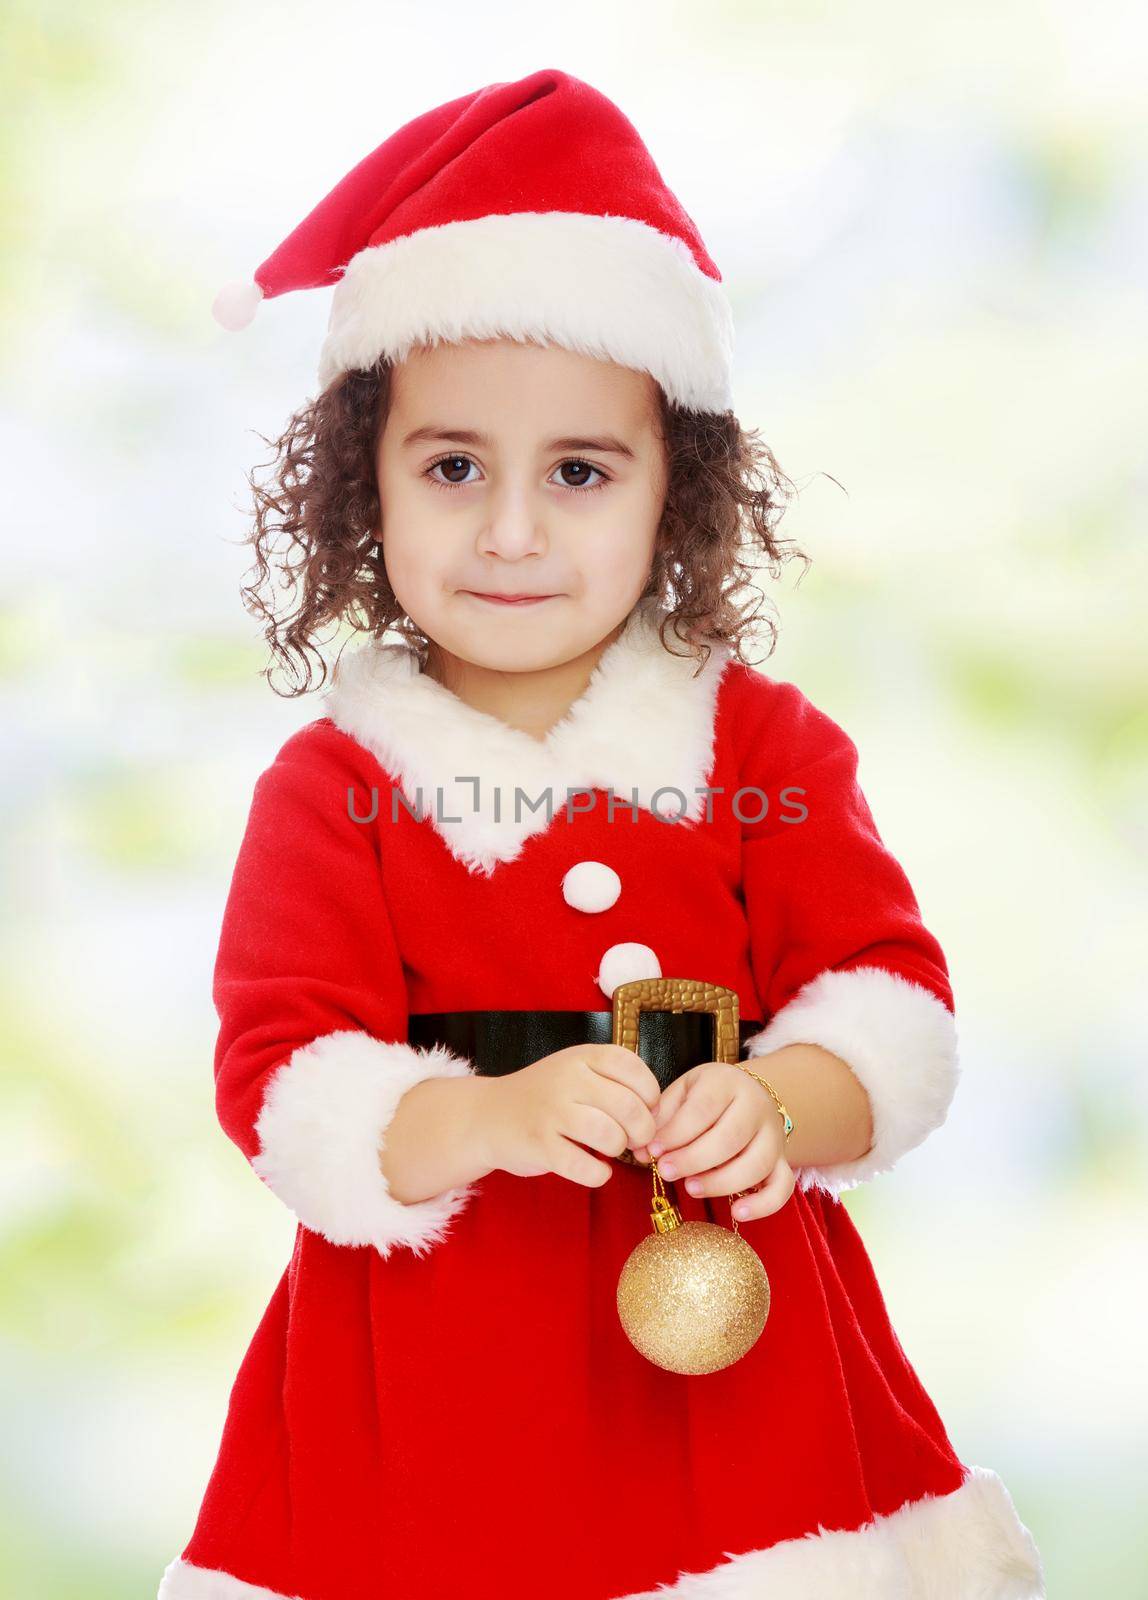 Little girl dressed as Santa Claus by kolesnikov_studio